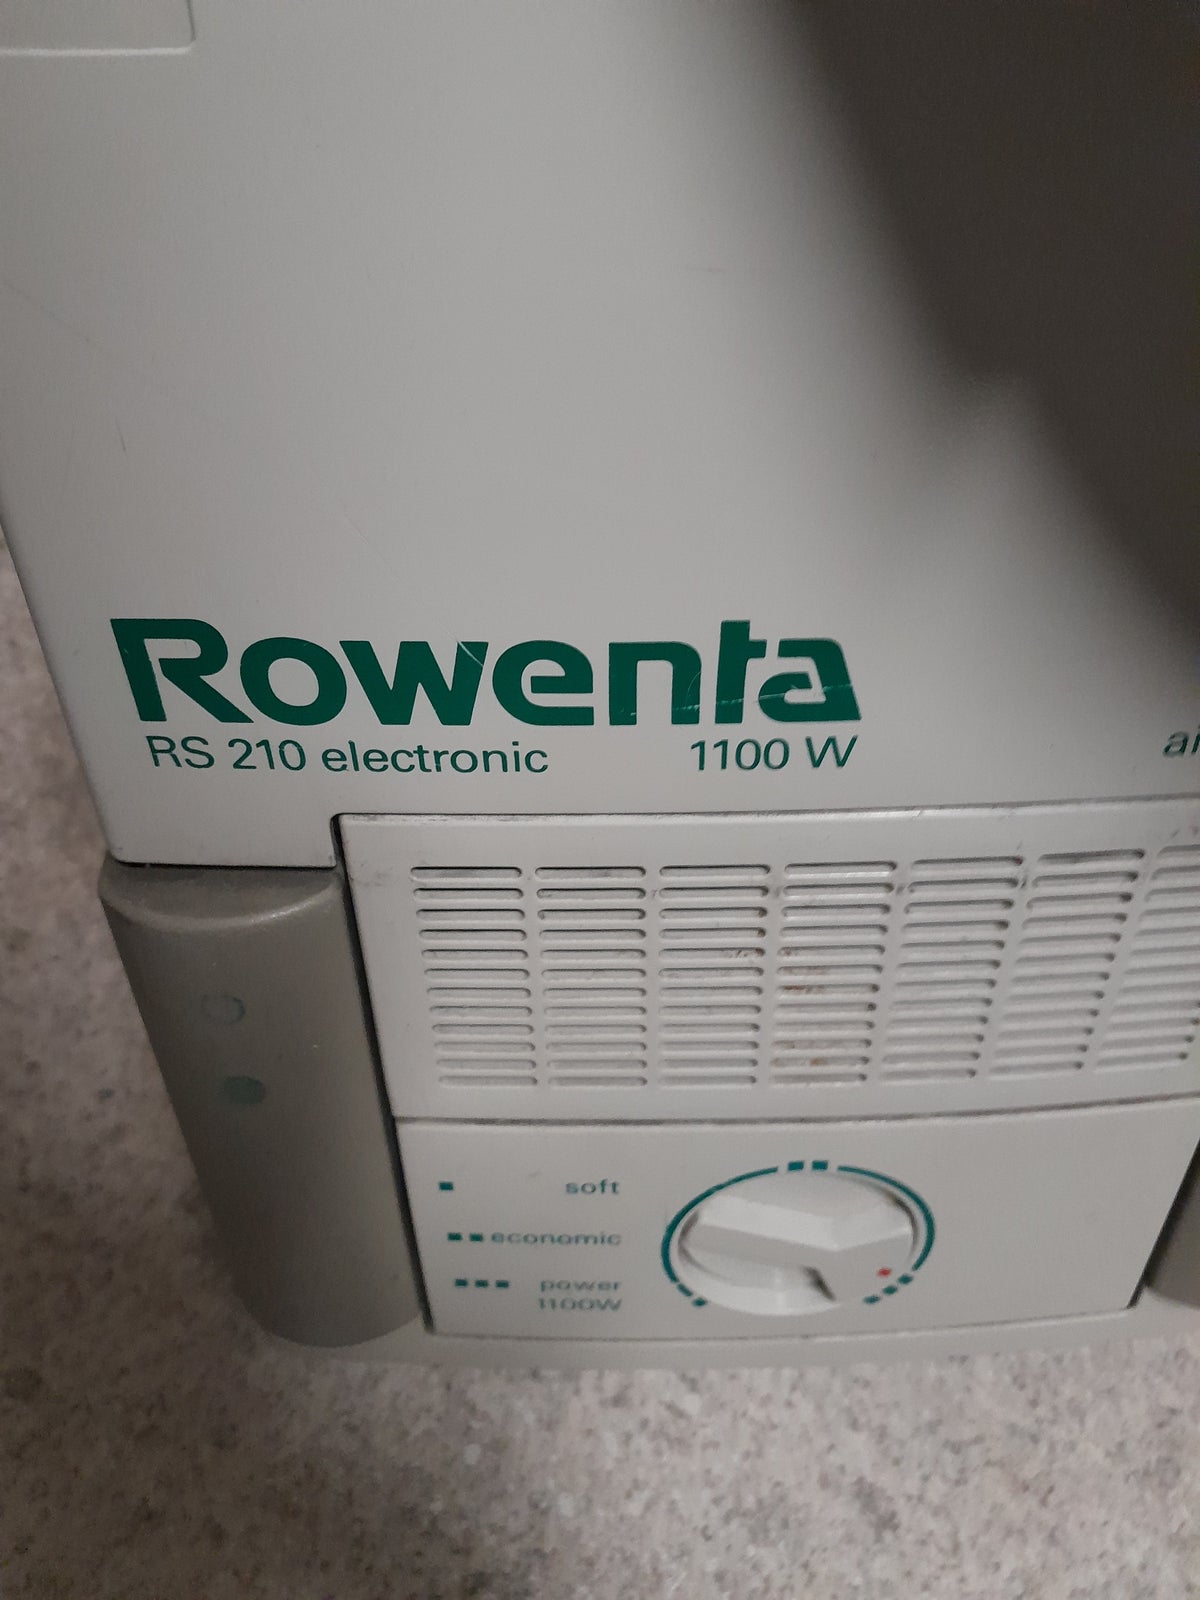 Støvsuger, Rowenta Rs 210 electronics, 1100 watt